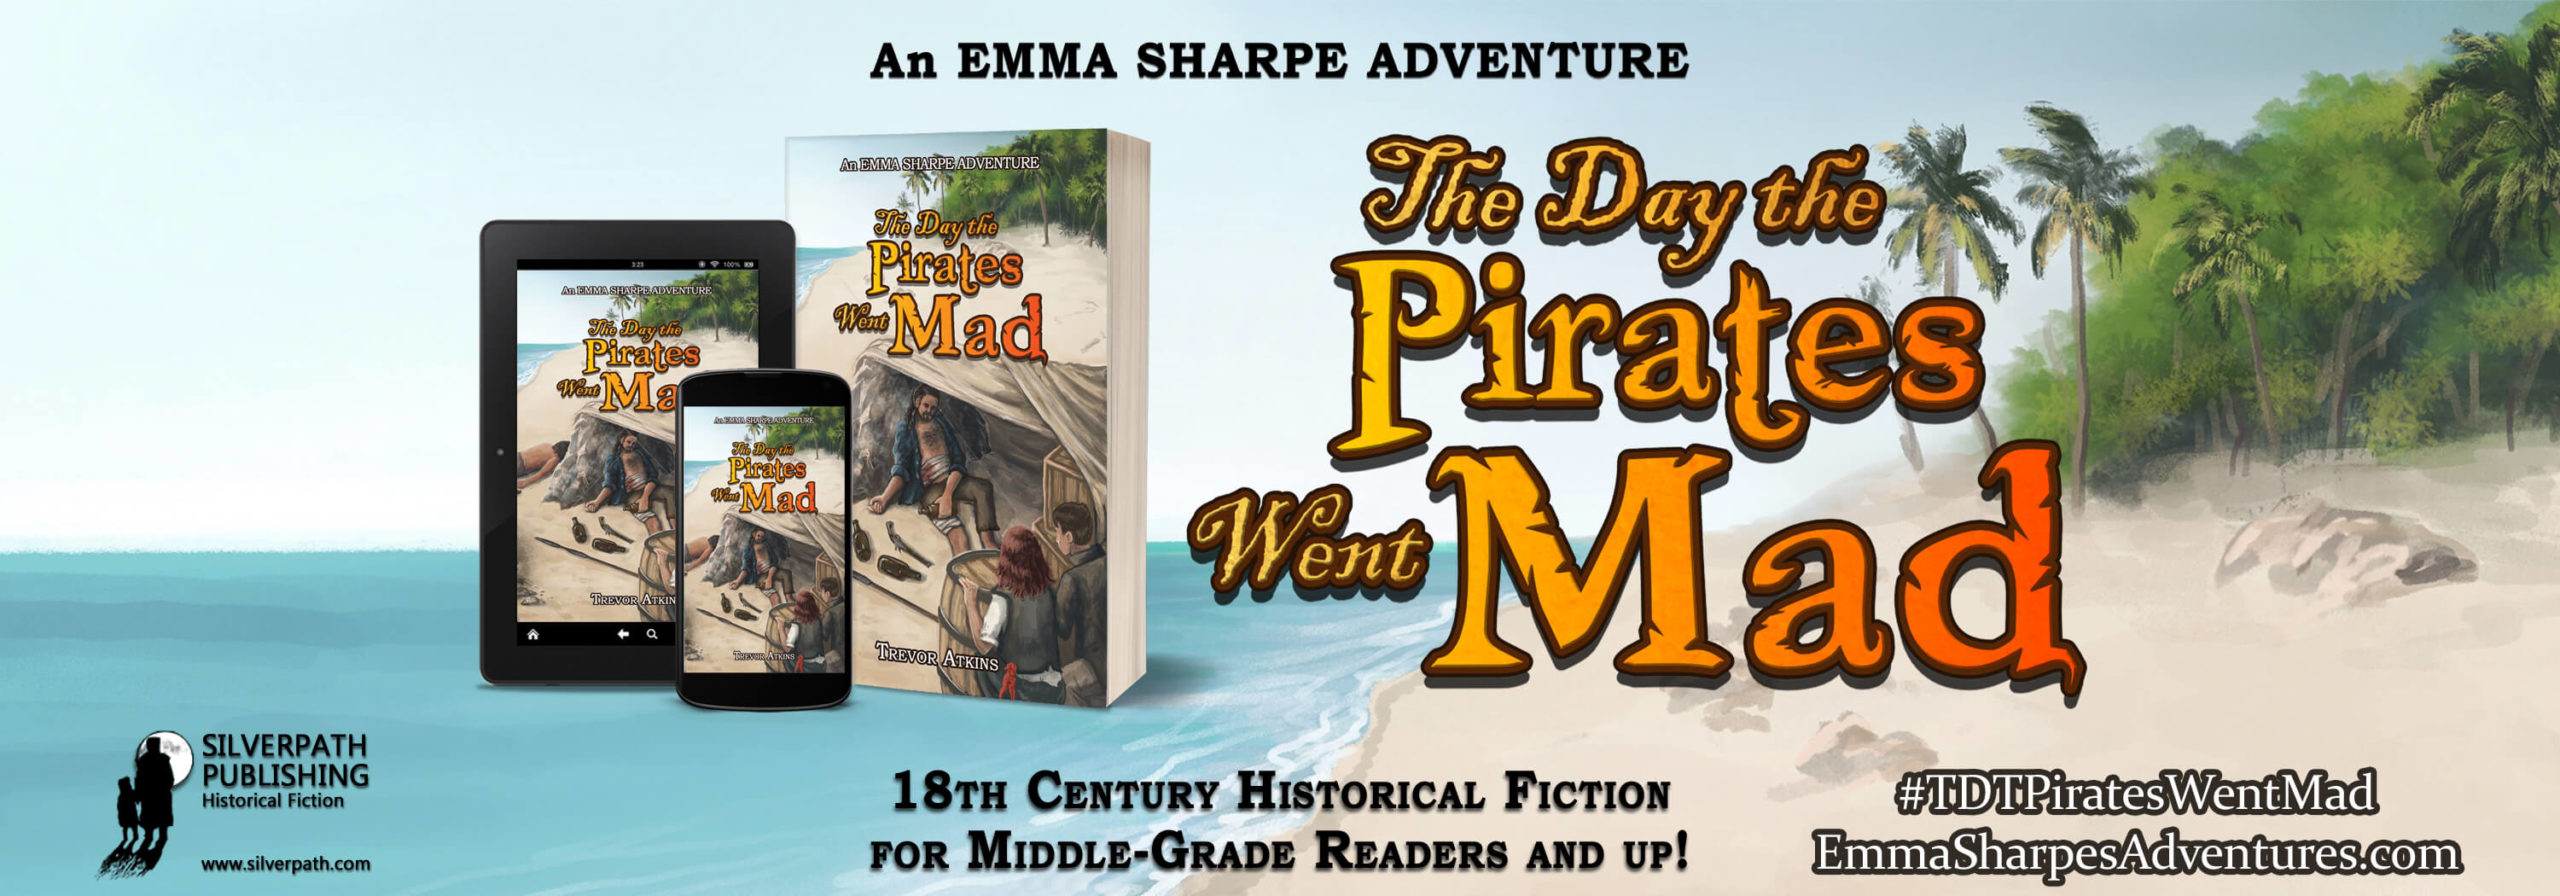 Silverpath.com - The Day the Pirates Went Mad - an Emma Sharpe Adventure - #TDTPiratesWentMad